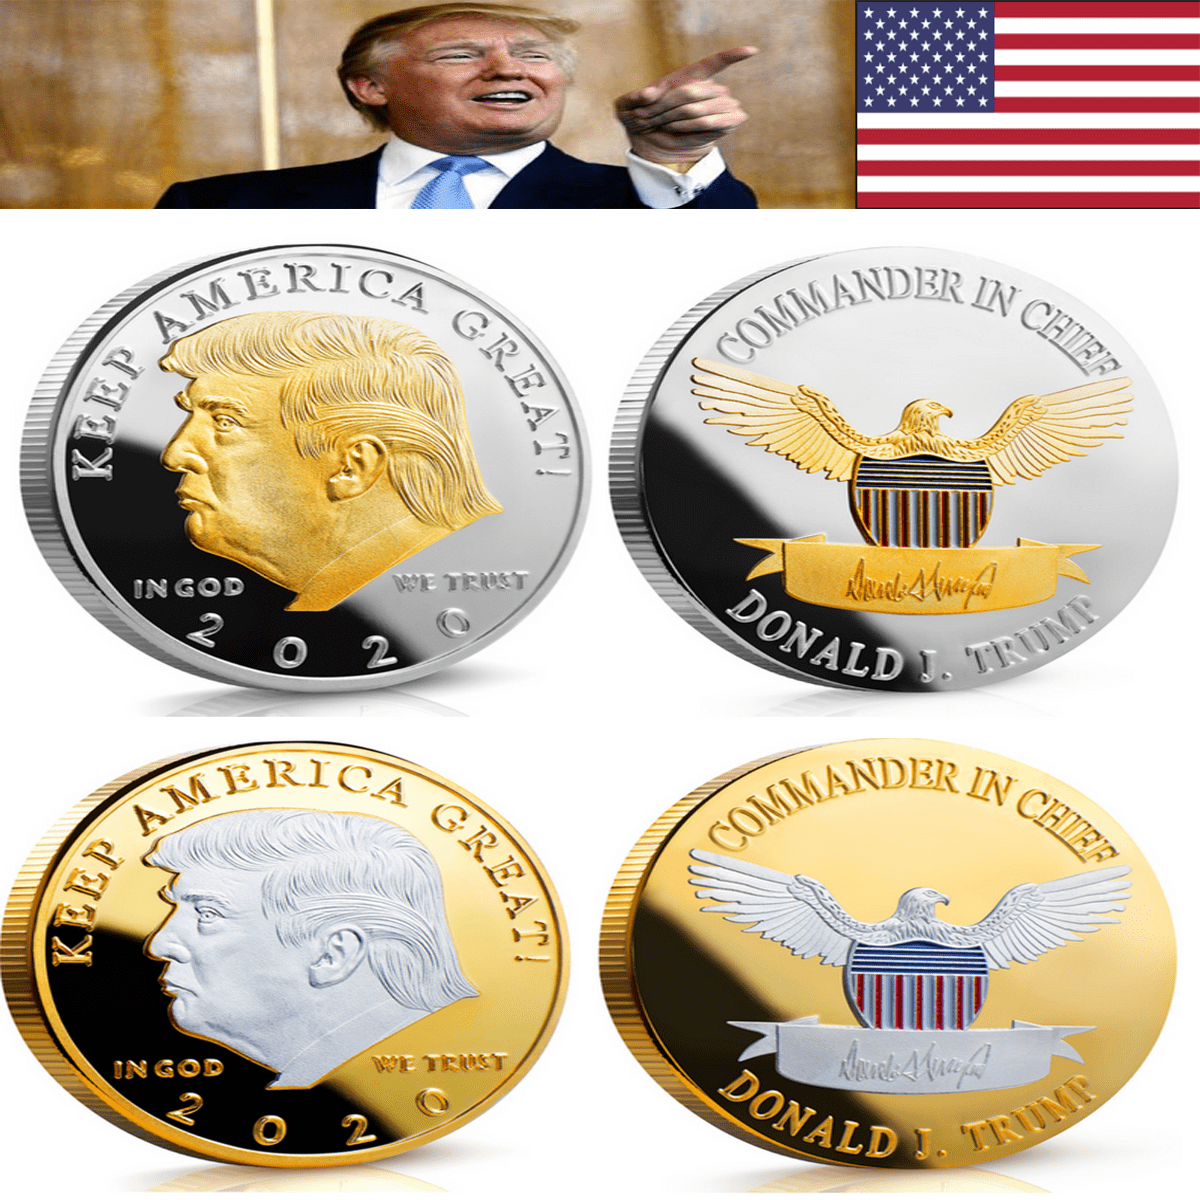 2020 President Donald Trump Silver Plated EAGLE Commemorative Coin 